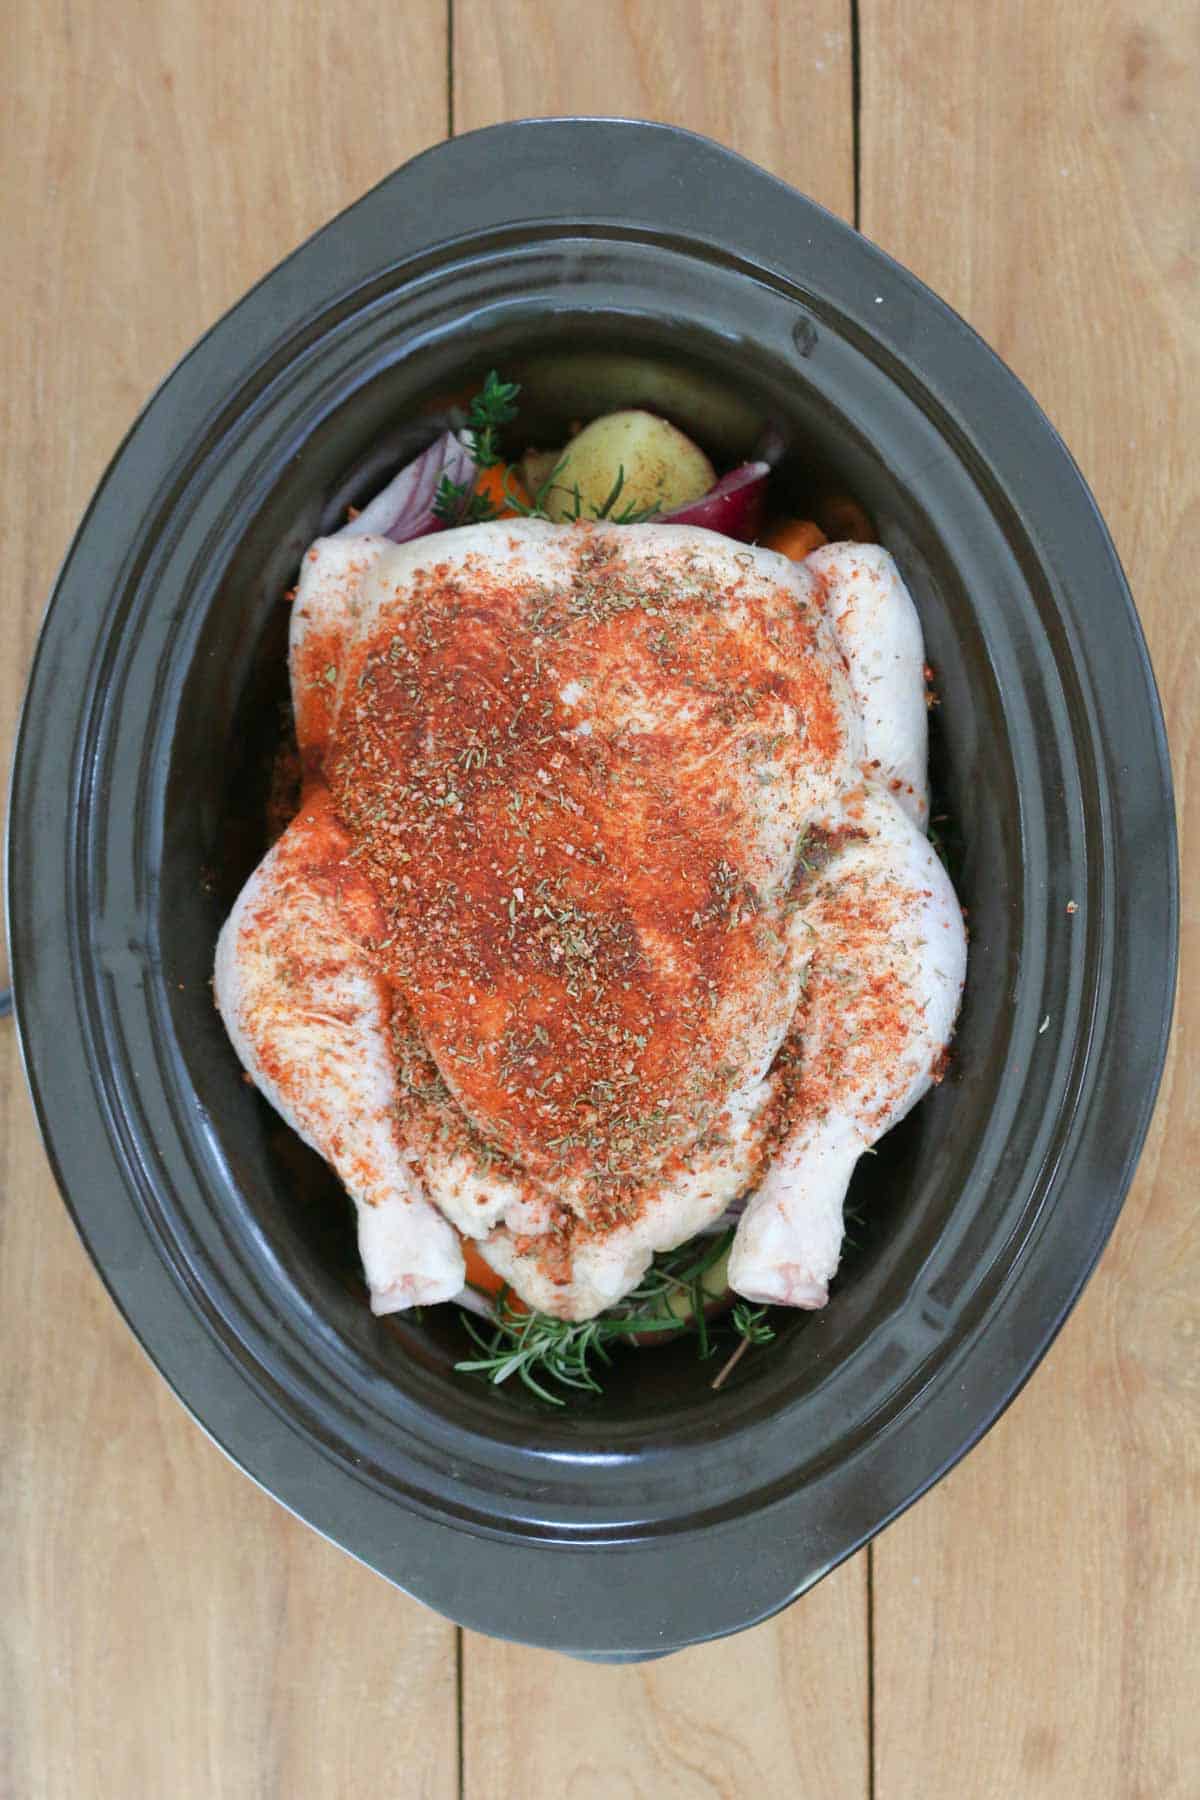 A seasoned uncooked chicken in a crock pot.